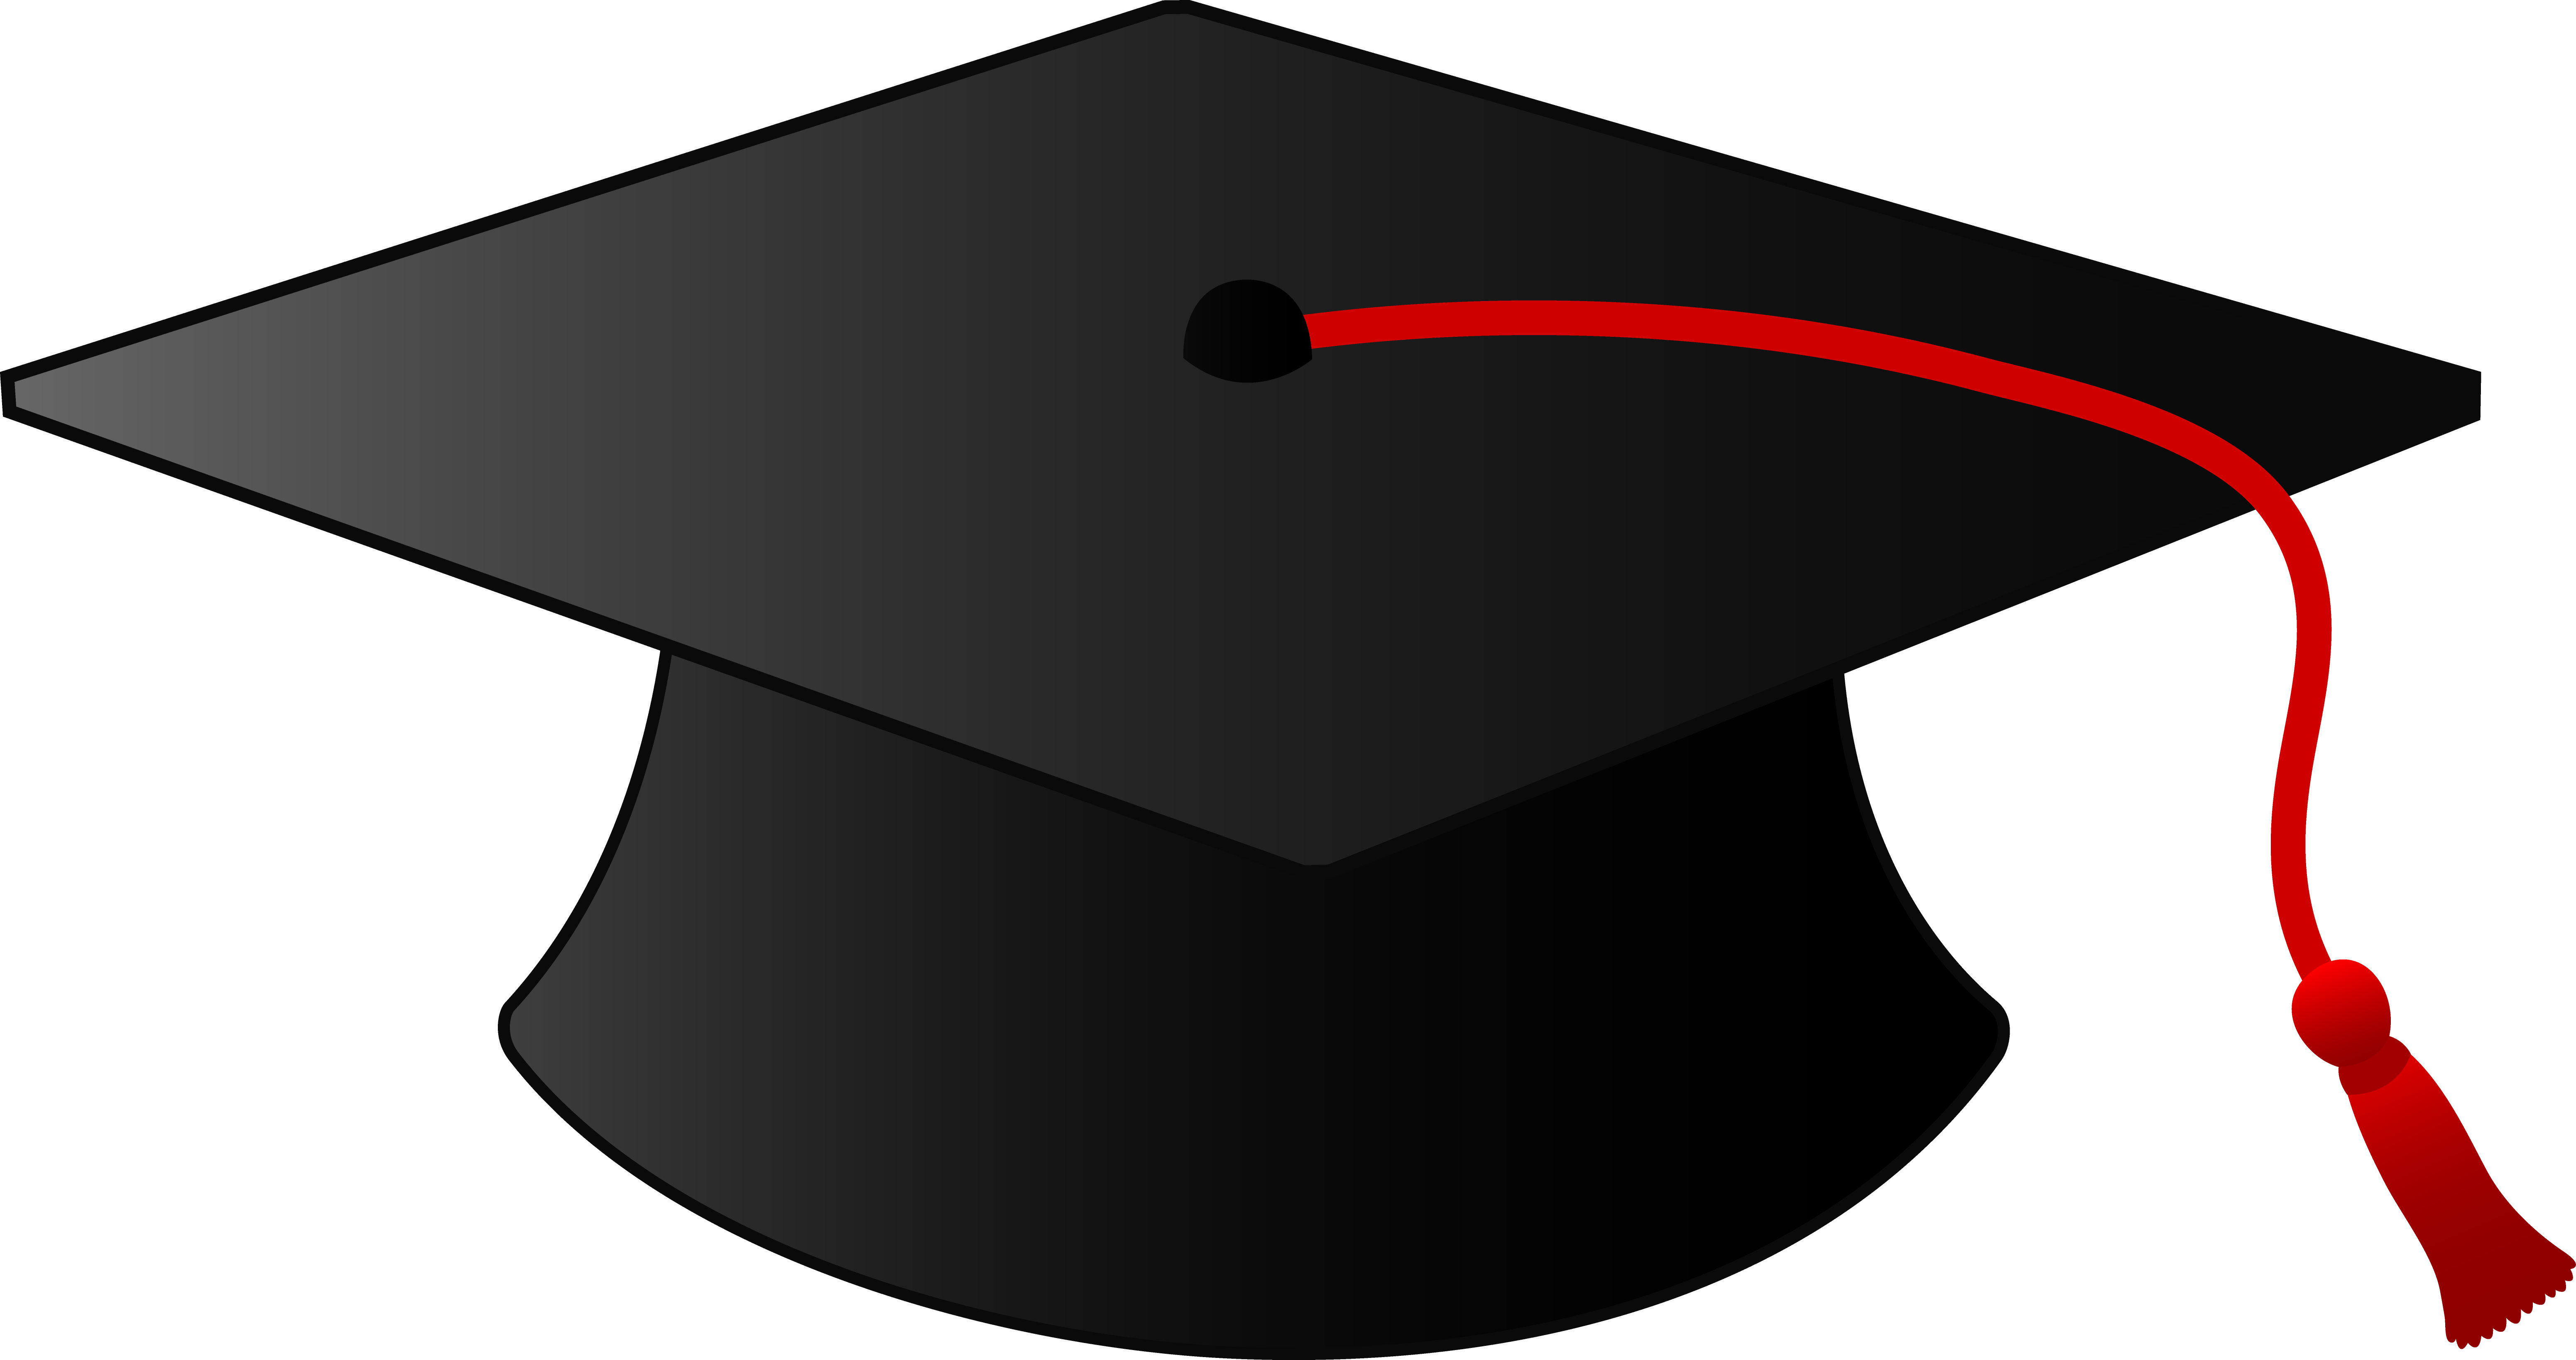 Graduation Cap With Tassel - Graduation Cap With Red Tassel (6204x3275)